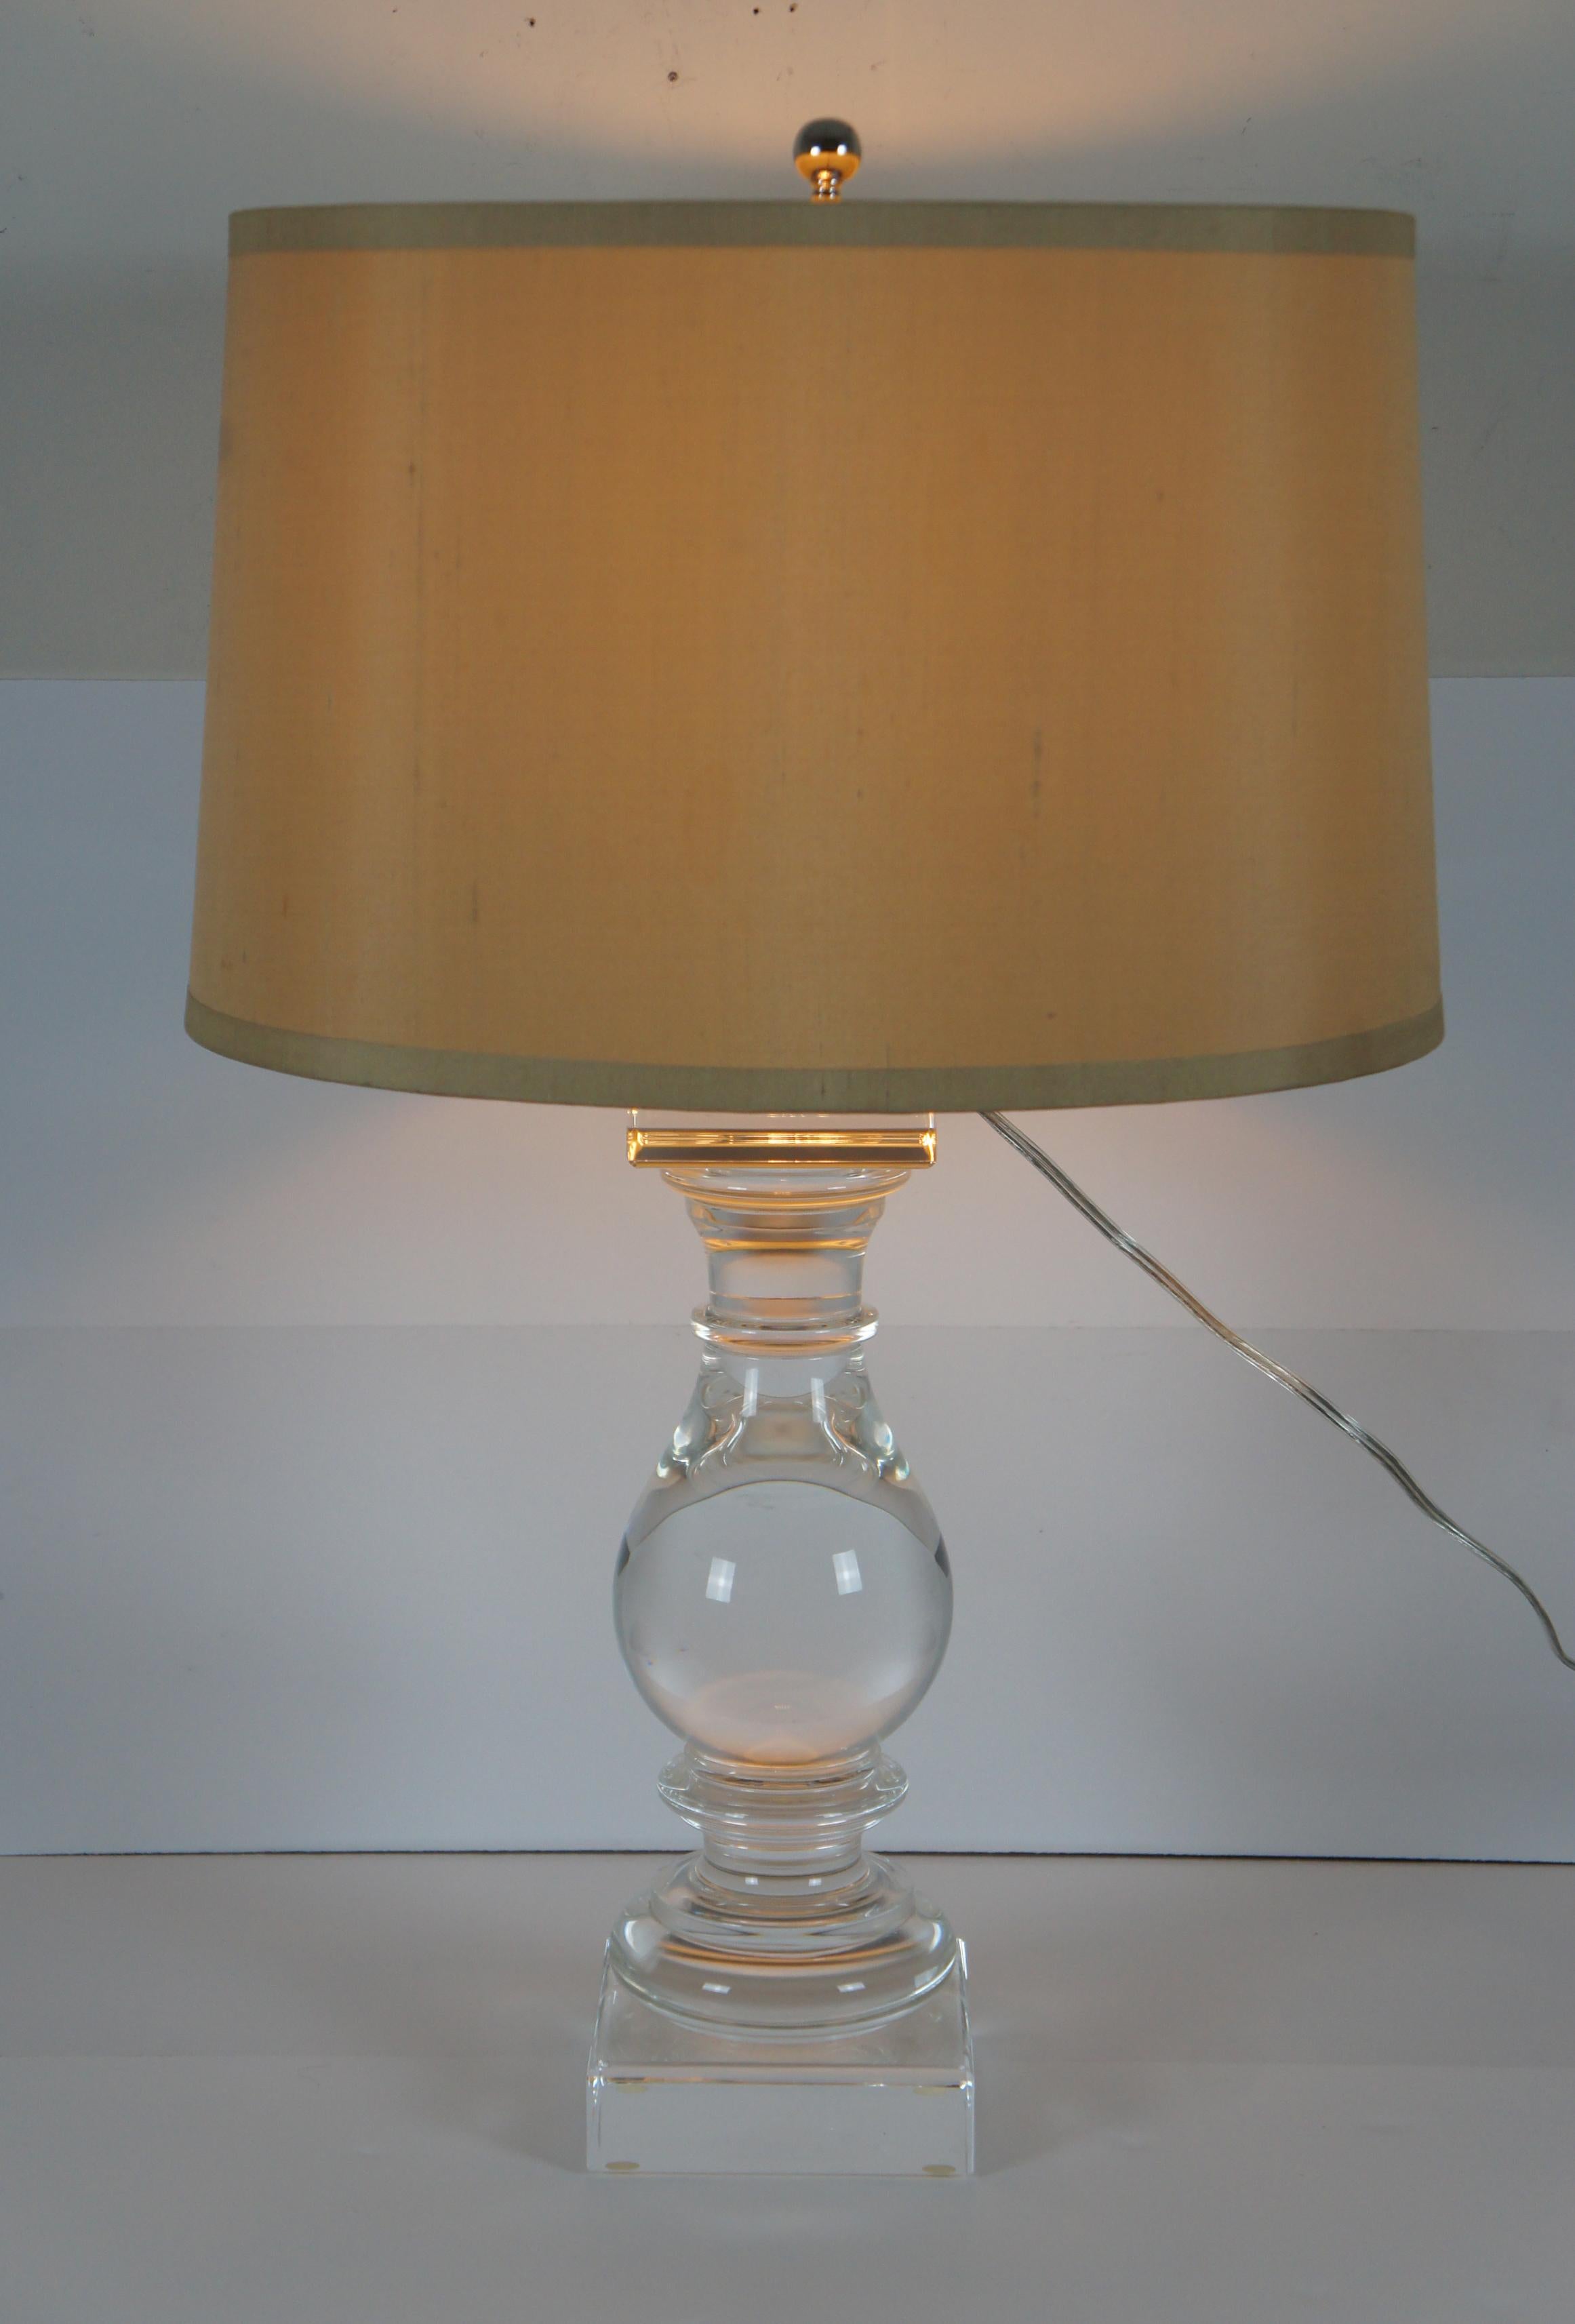 20th Century Restoration Hardware Modern Crystal Banister Table Lamp Baluster Light Glass